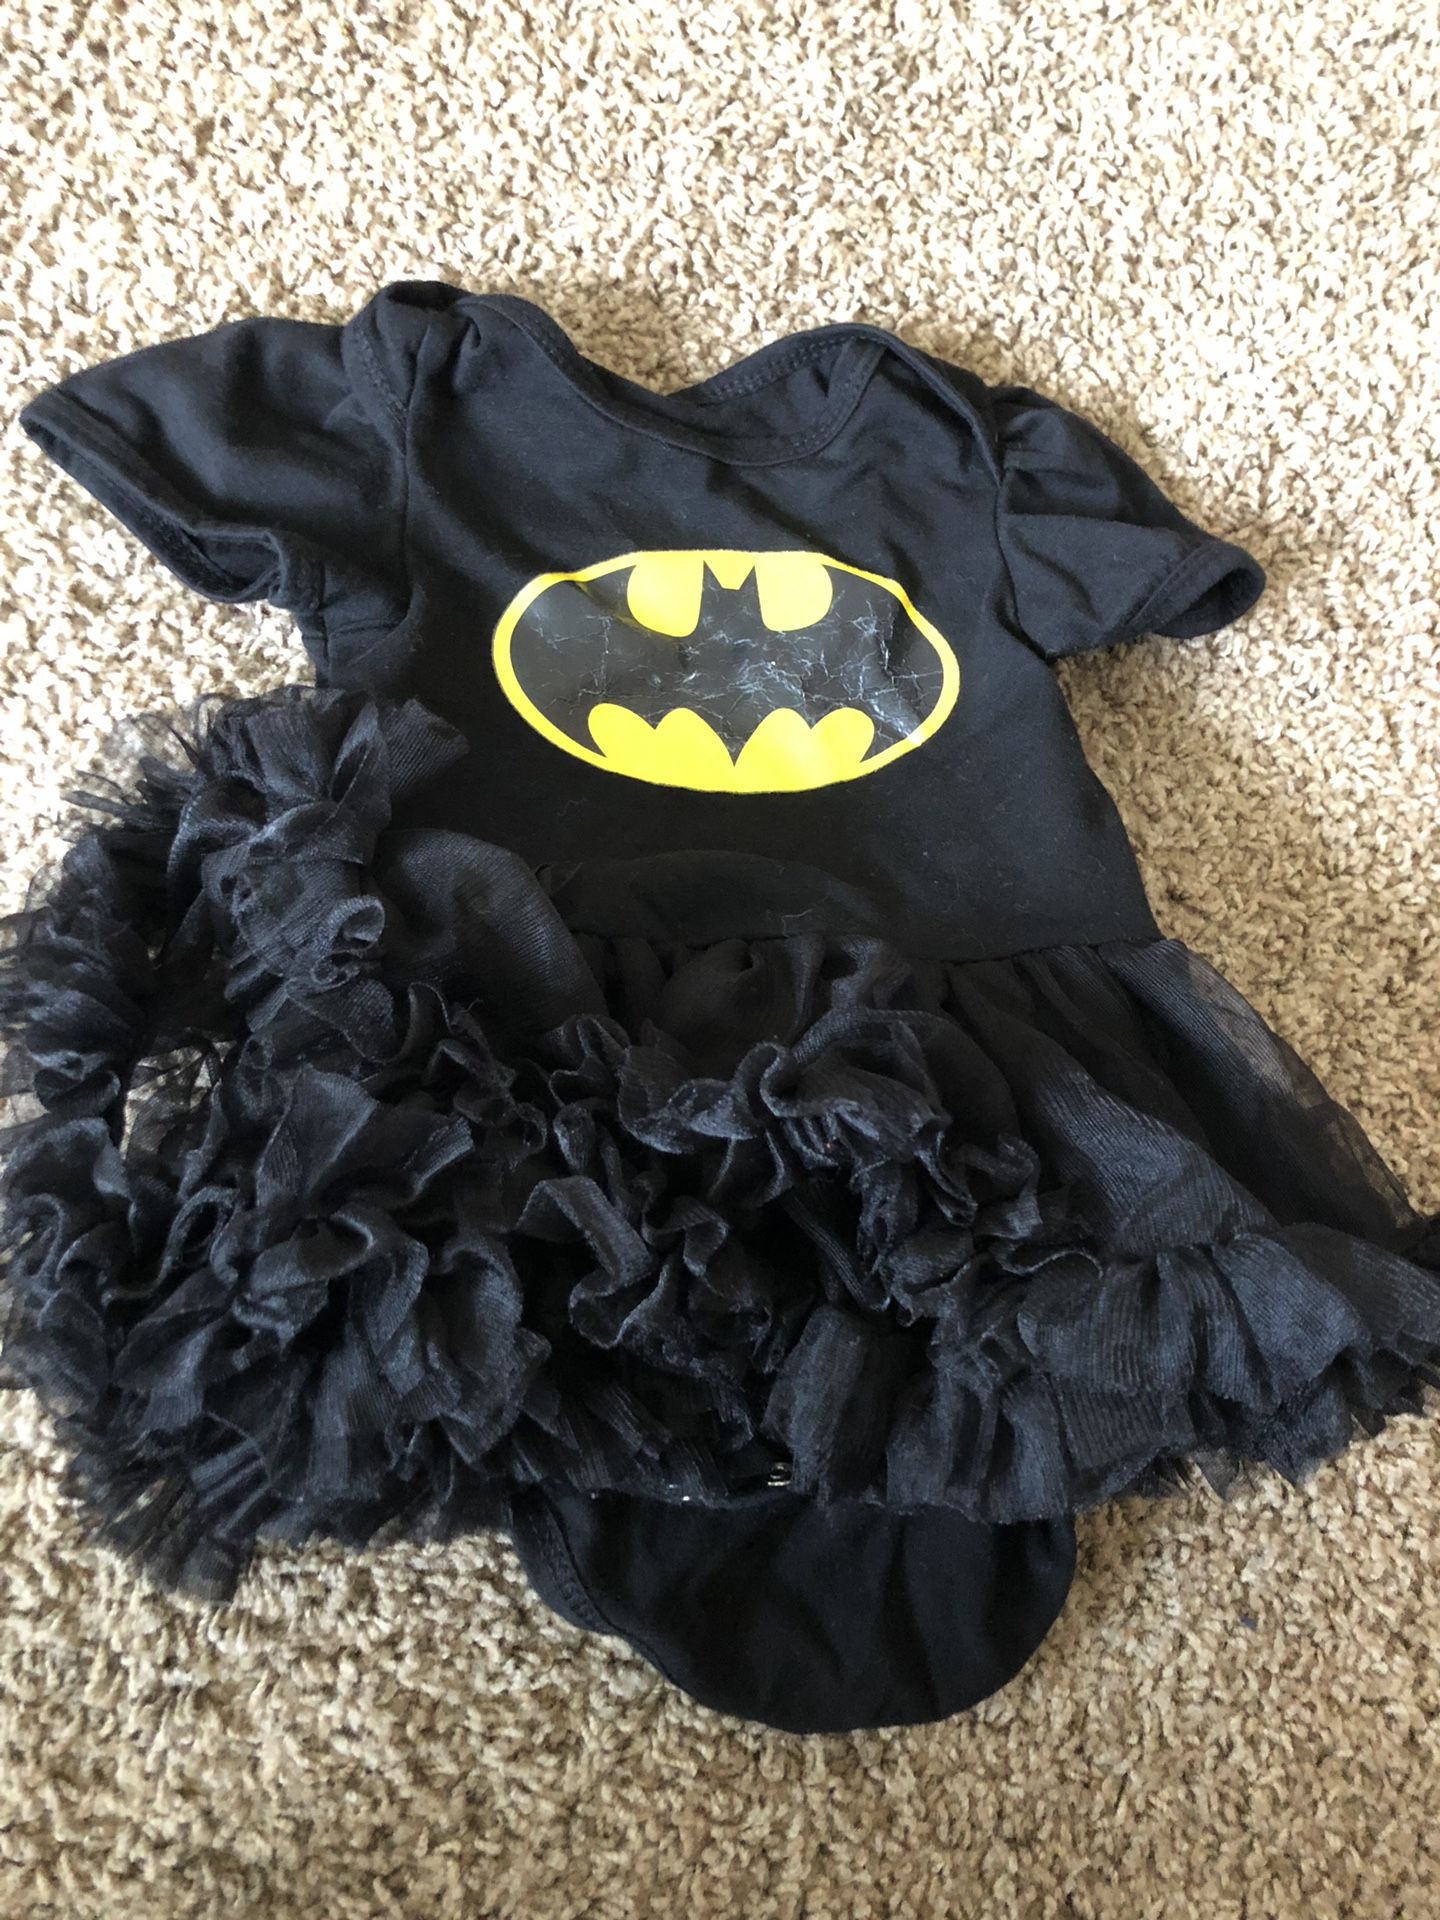 Batman dress infant